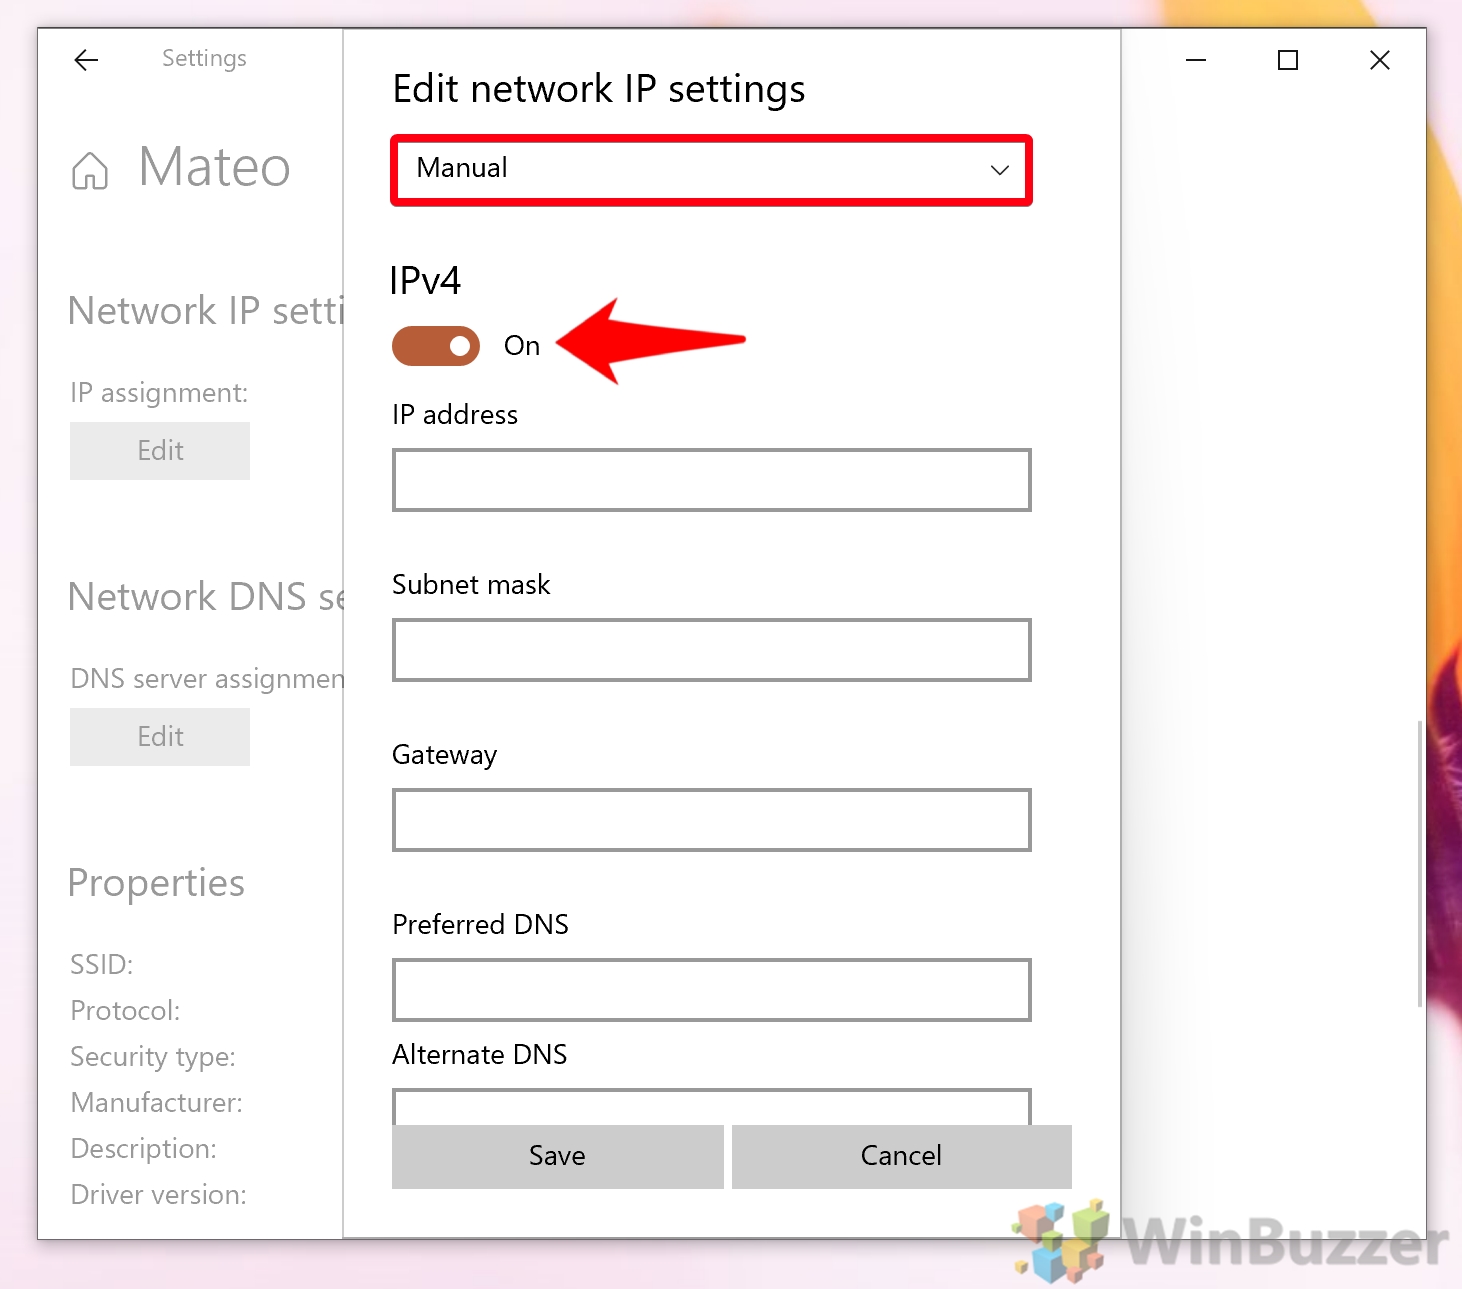 Windows 10 - Settings - Network & Internet - Wifi - Edit IP Assignment - Manual